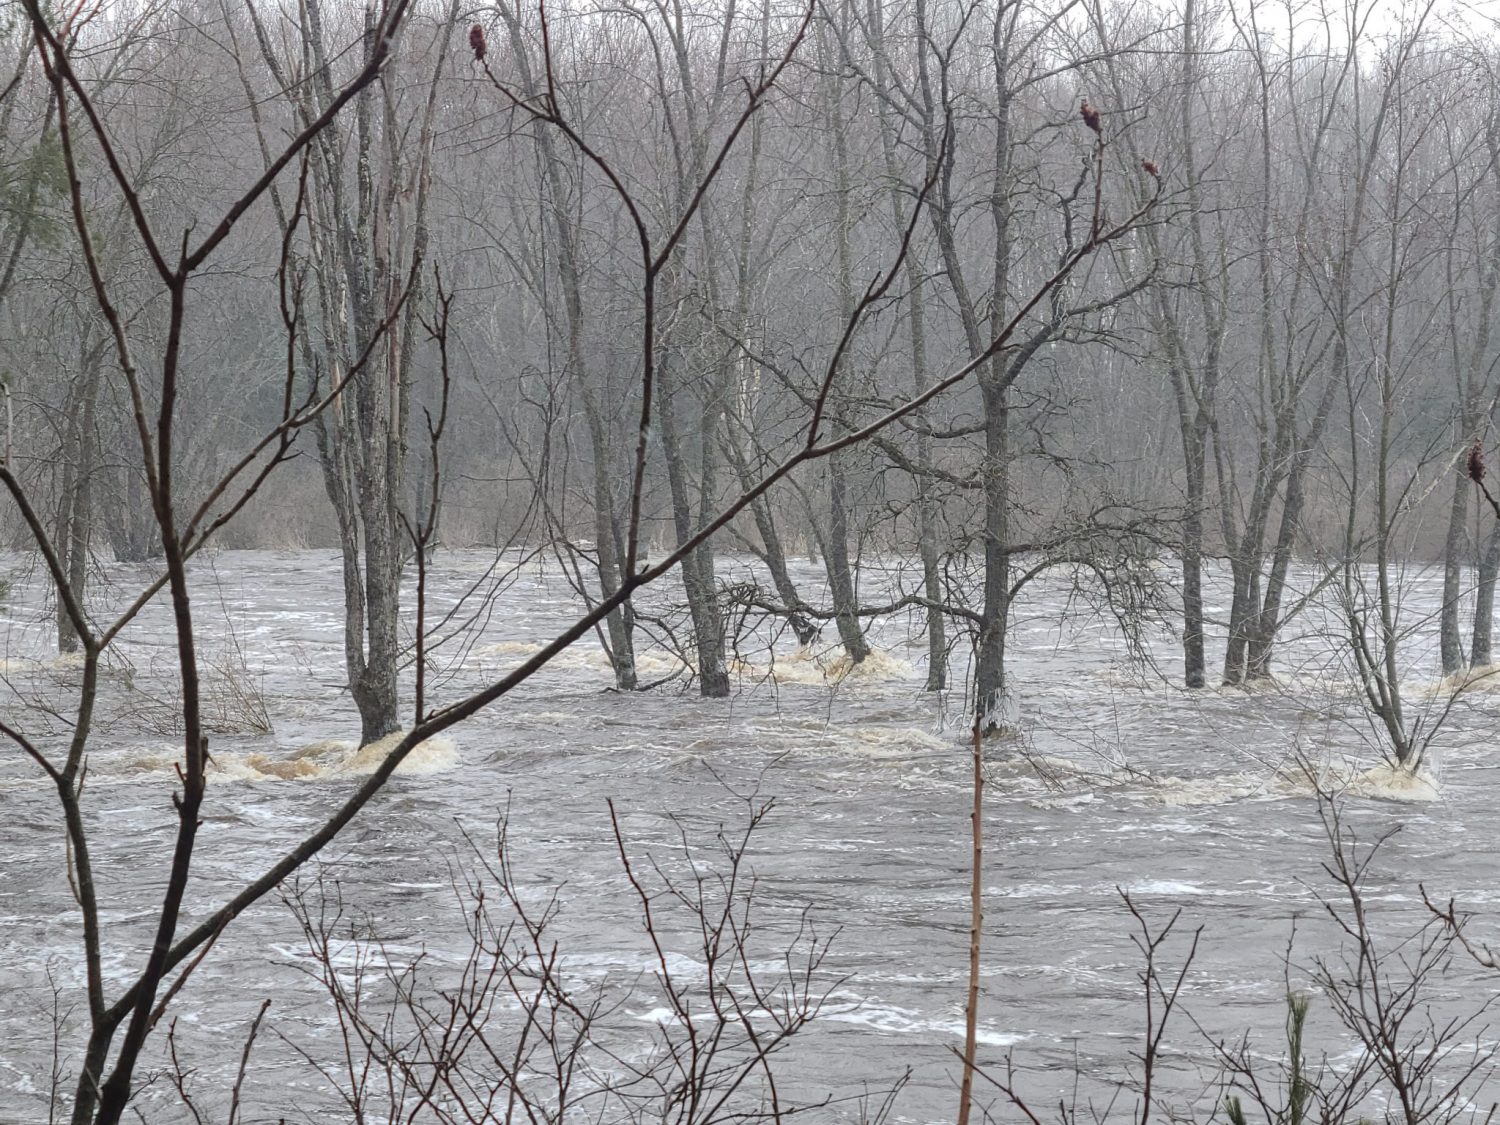 The Merrill area experienced seasonal spring flooding last week